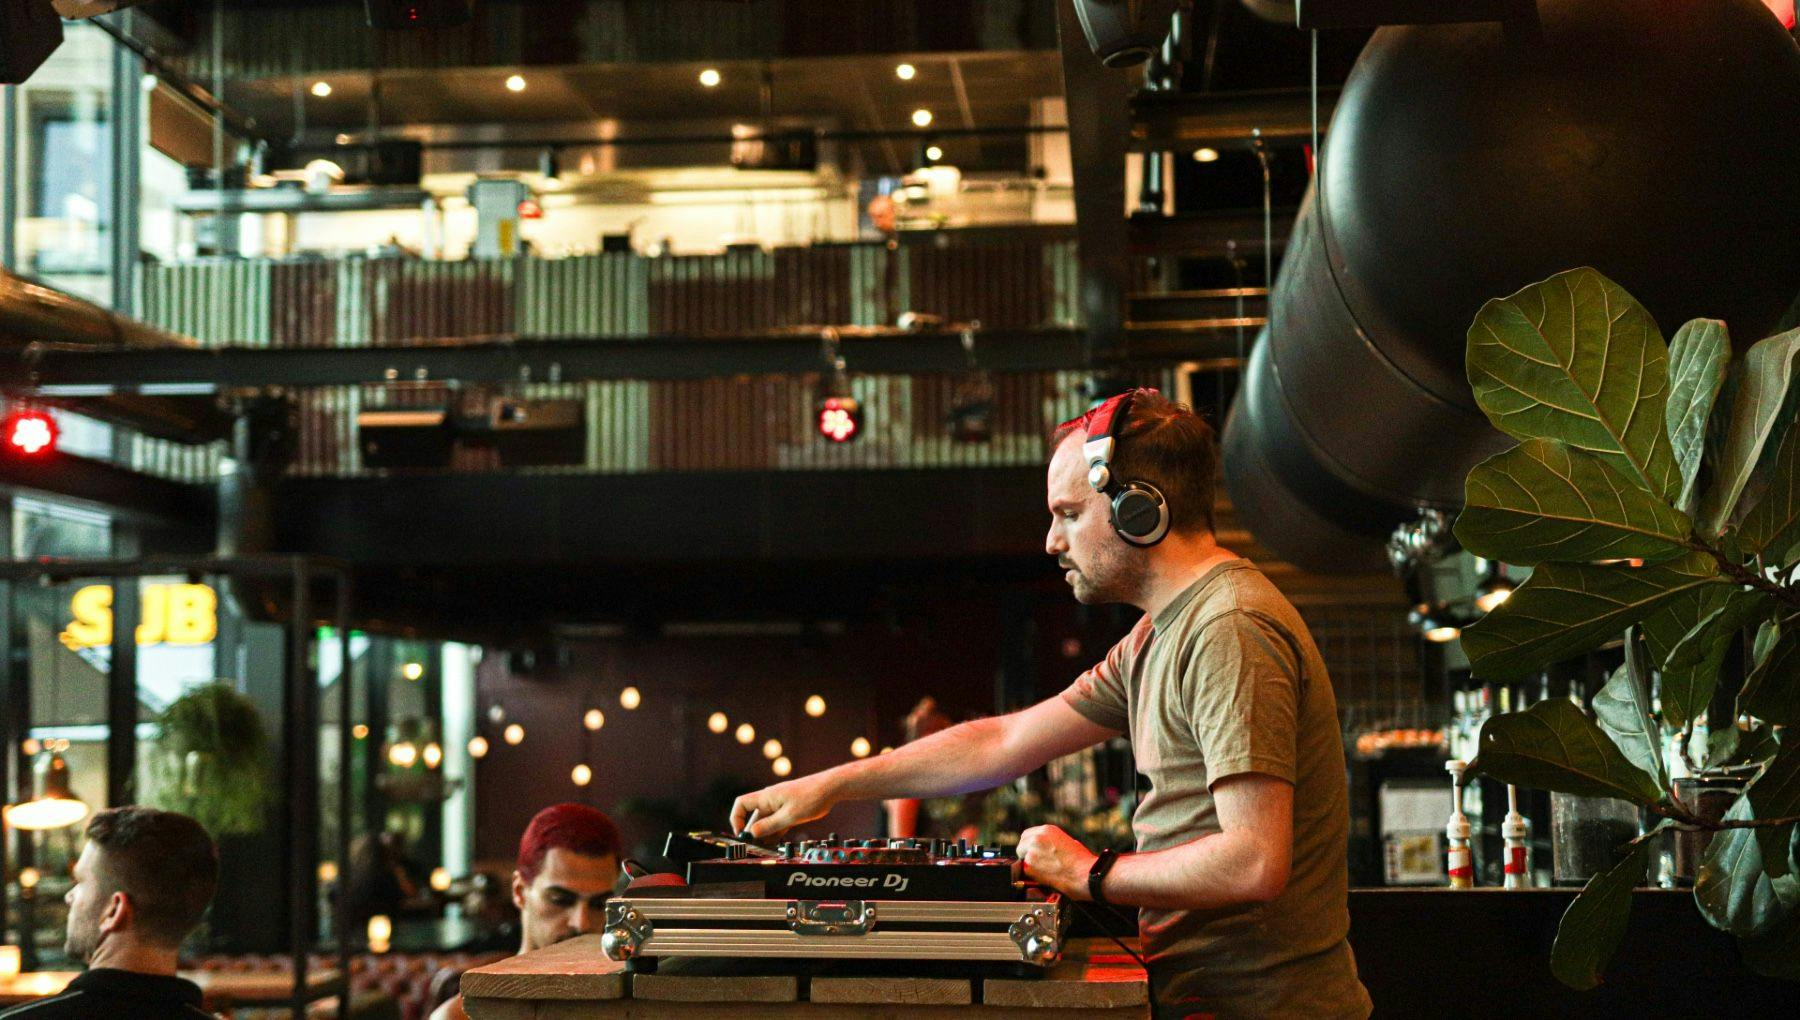 LELY bar restaurant DJ playing music